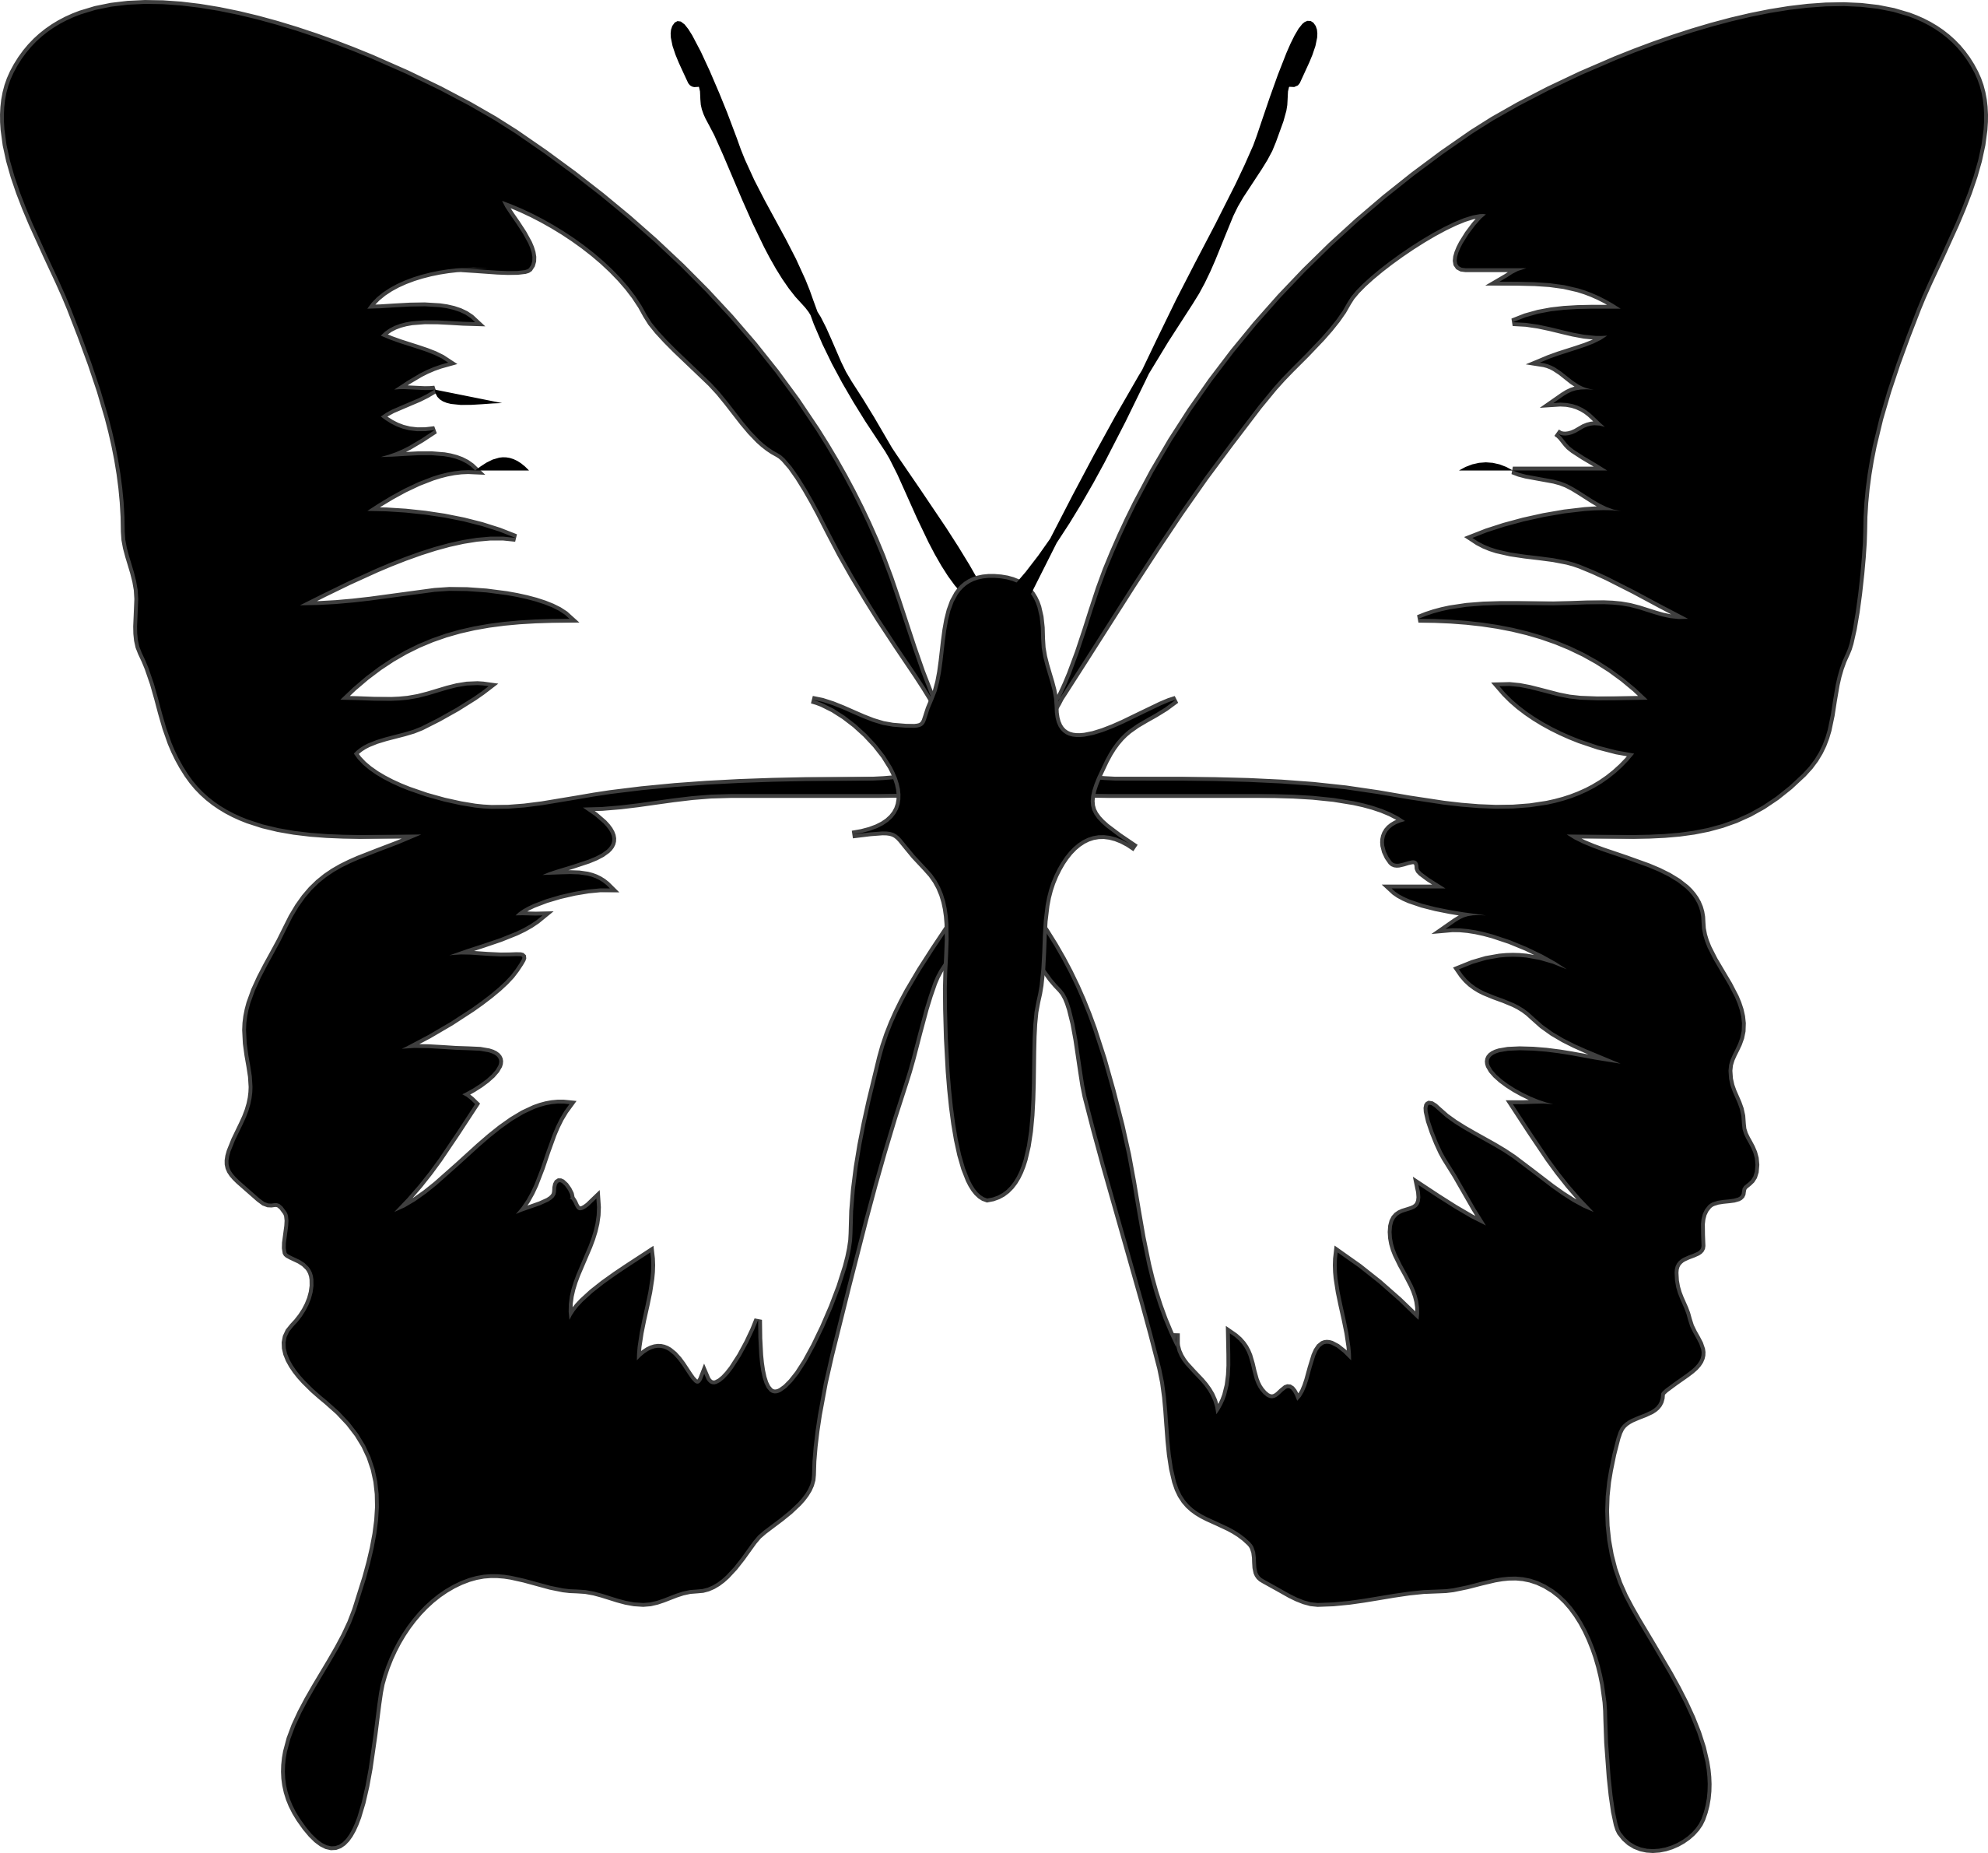 Butterfly clip art black. Knee clipart outline